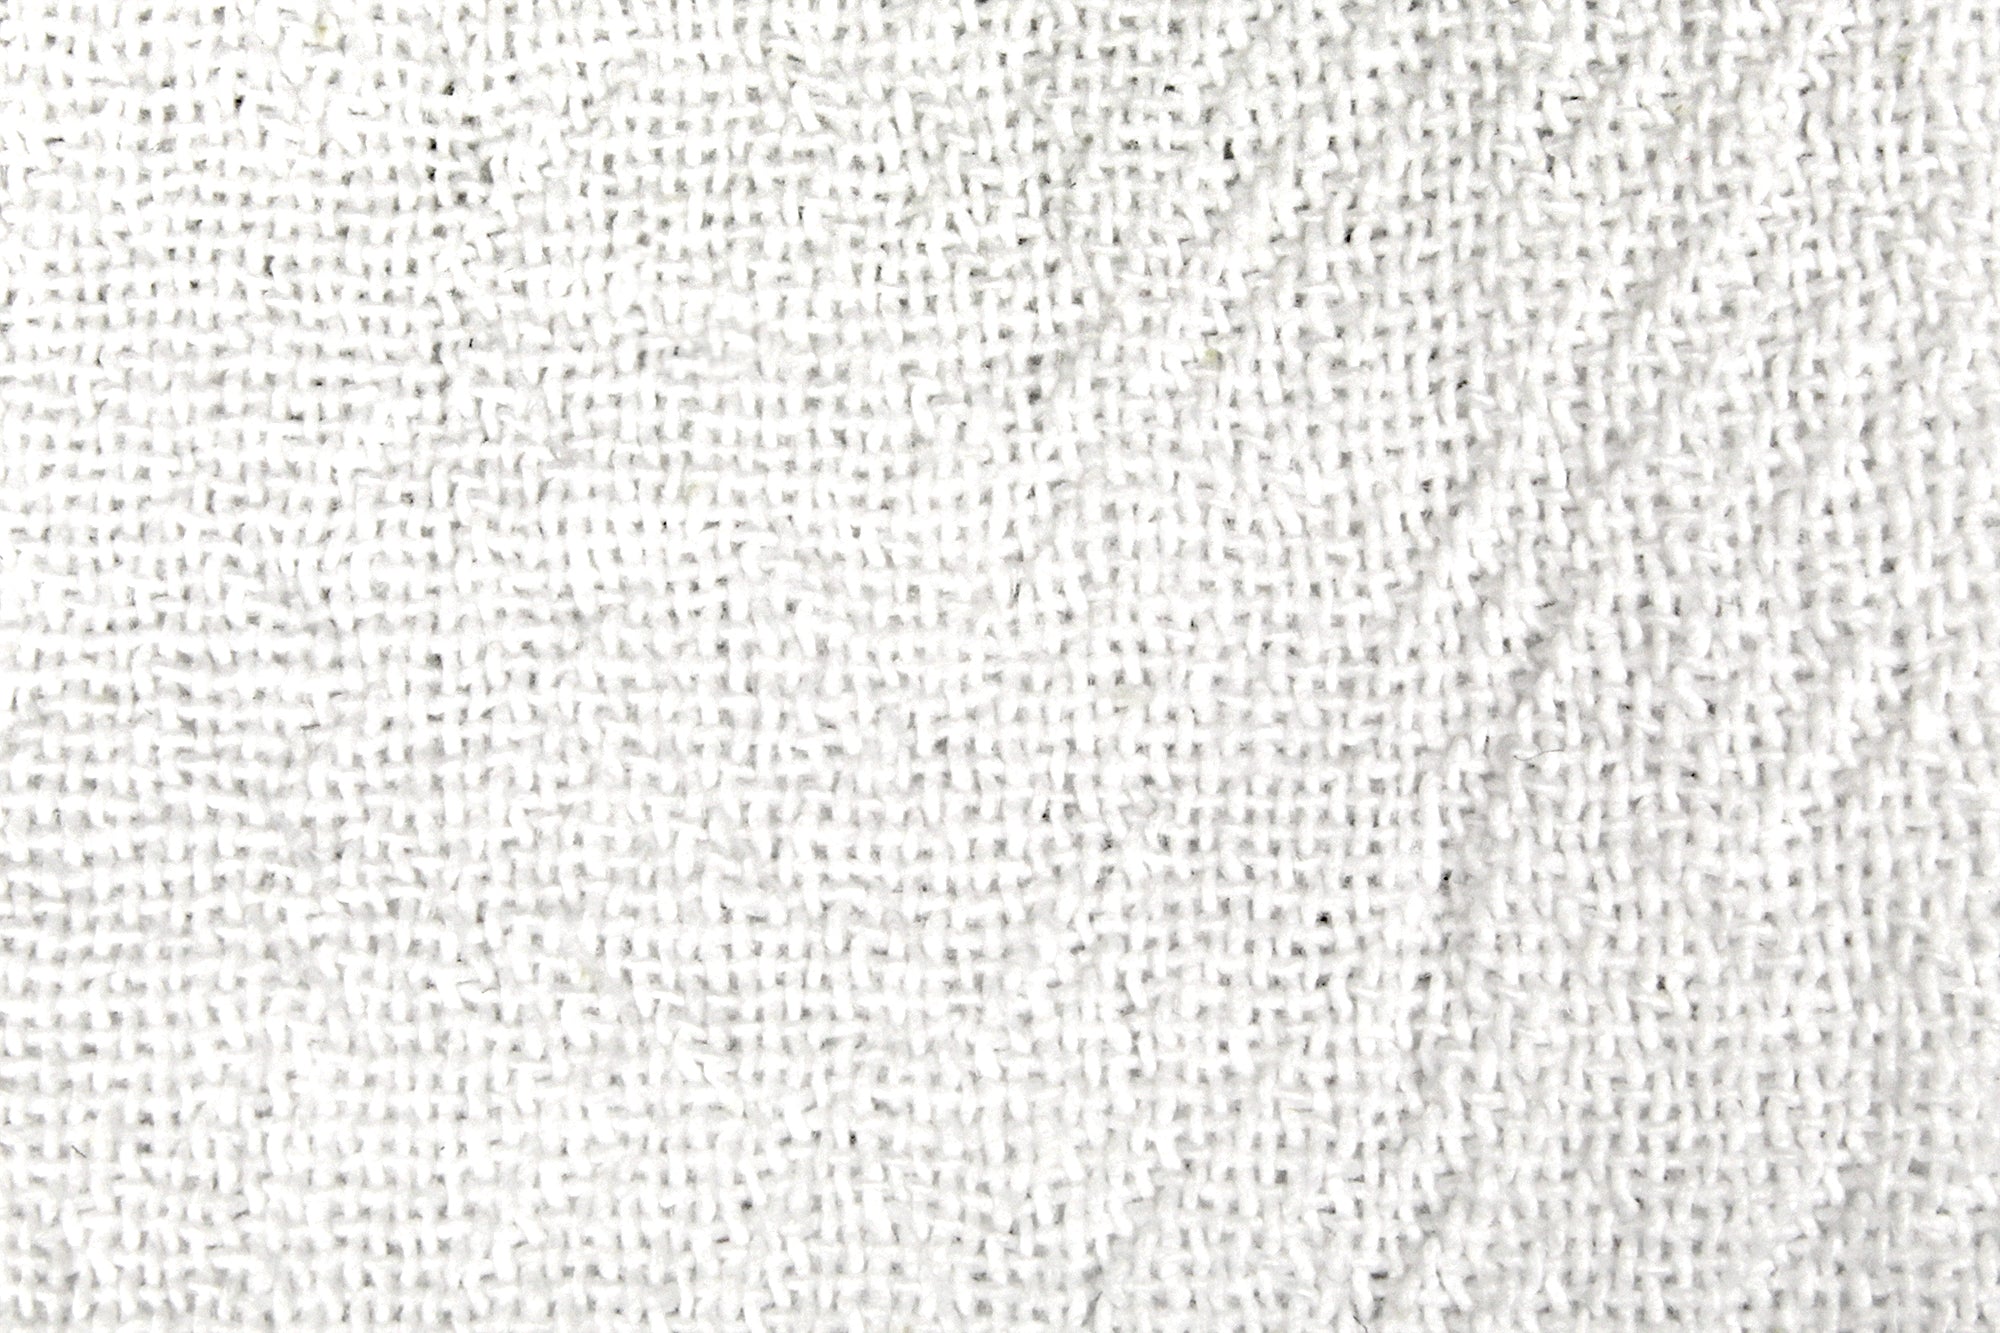 Nouvelle Legende® Pearl Weave Microfiber Dish Cloths – 2-pack – Eurow